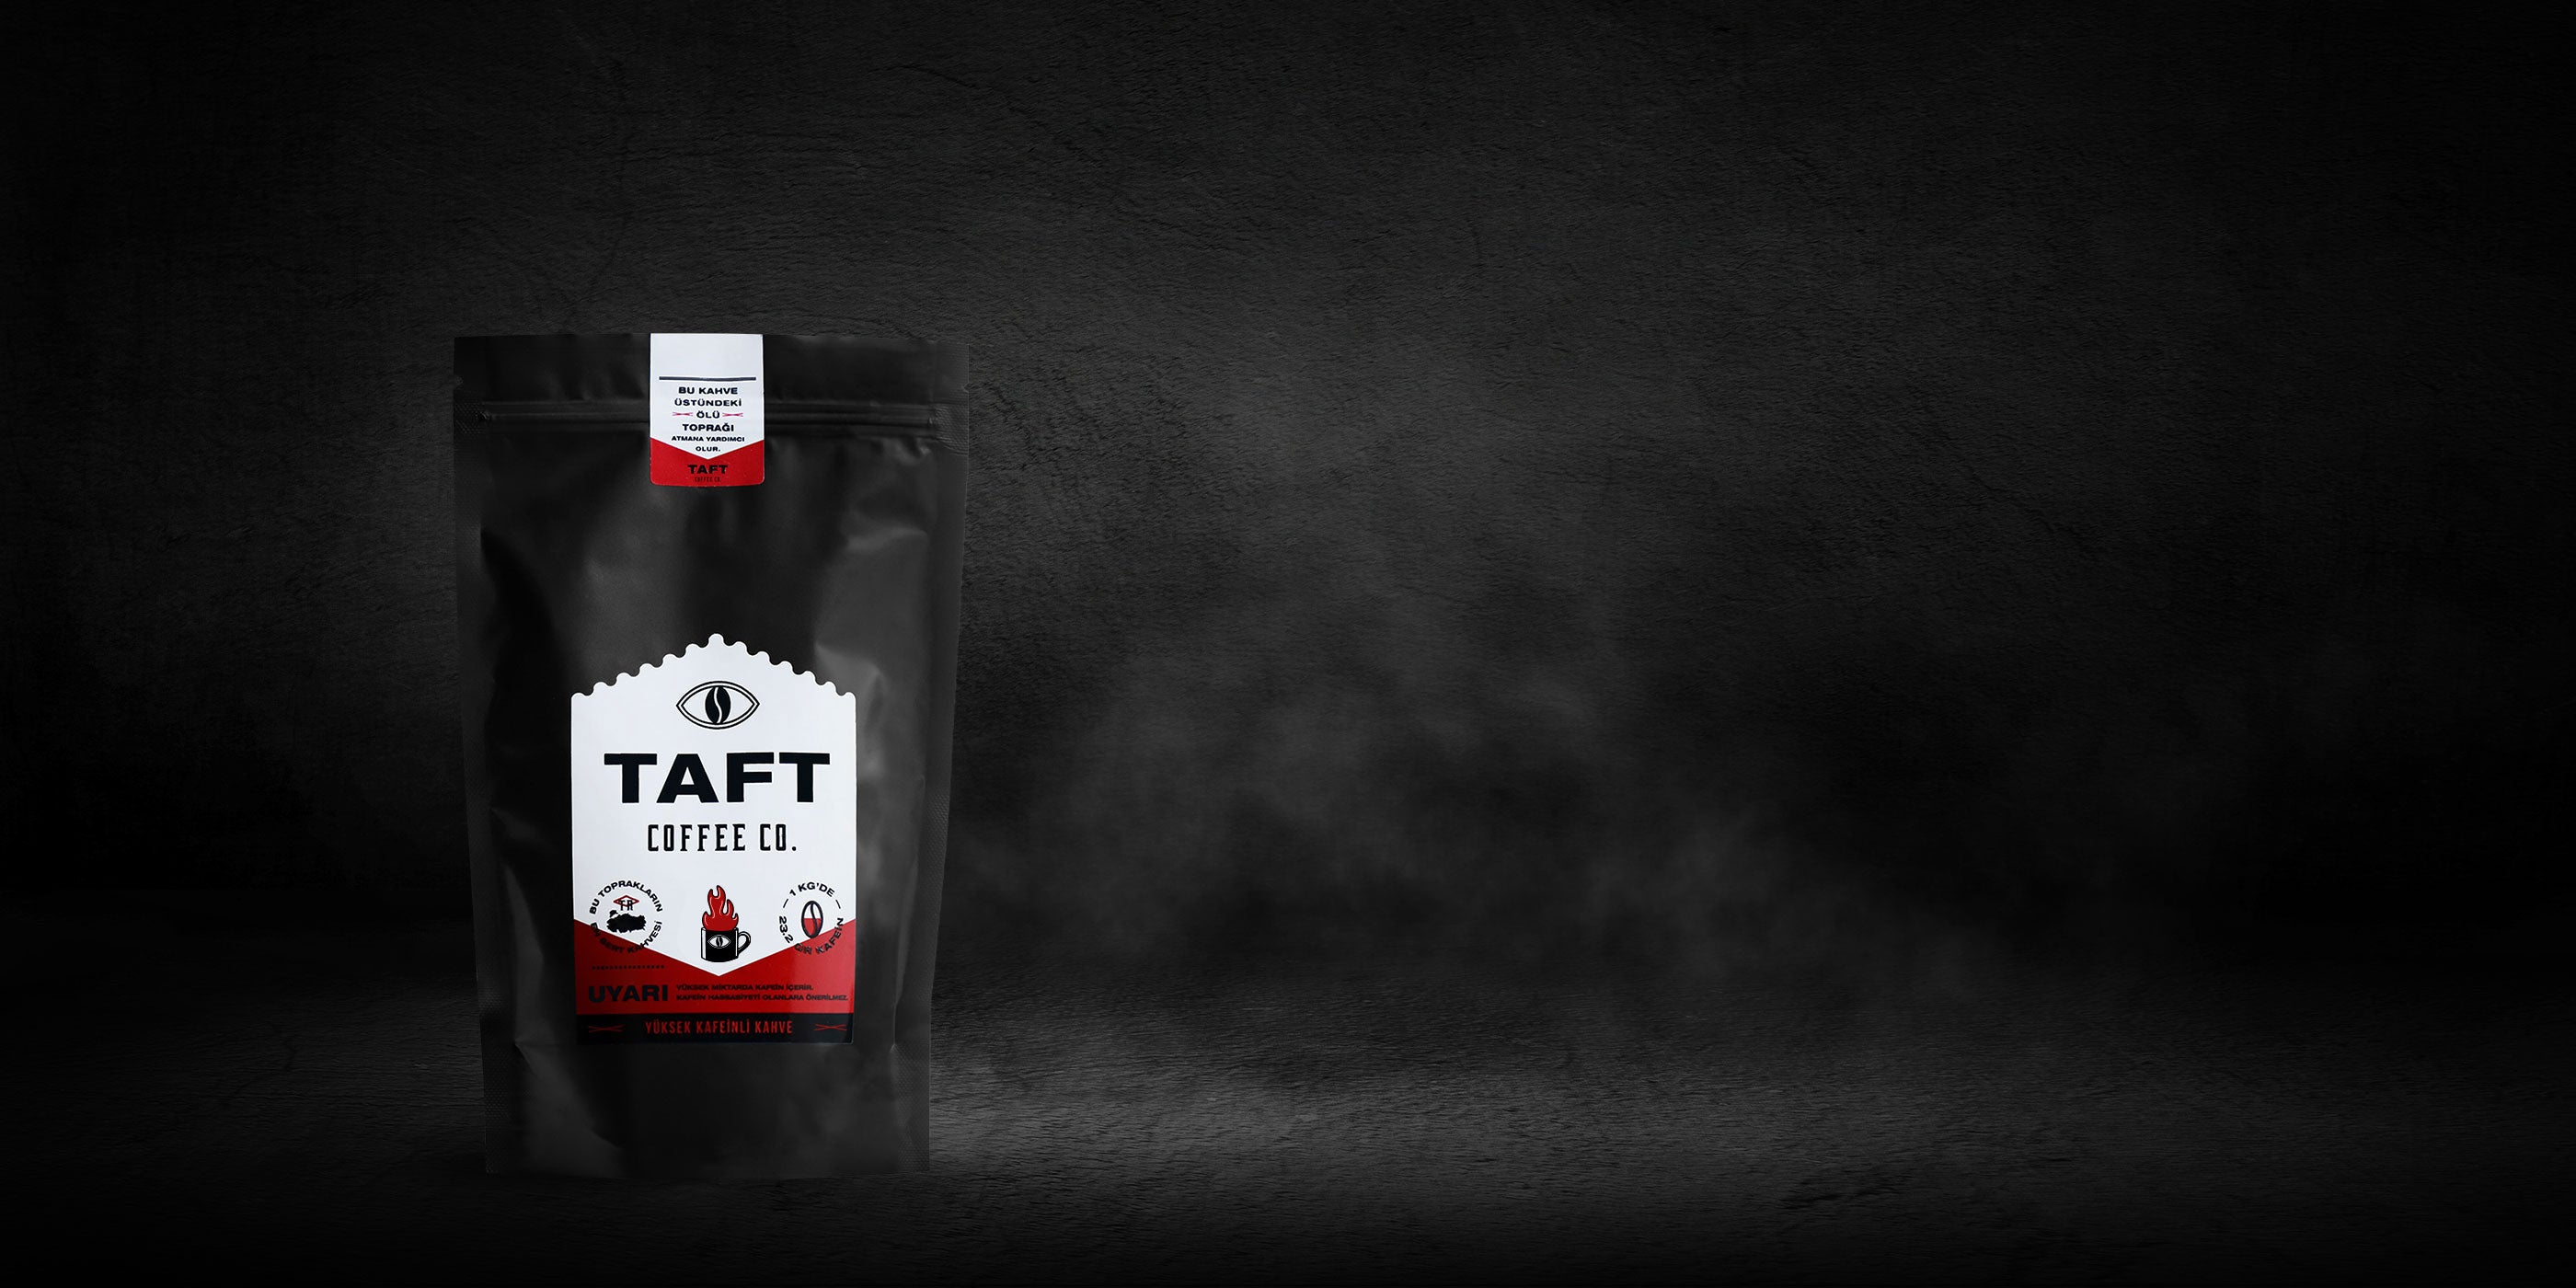 TAFT Coffee Yüksek Kafeinli Filtre Kahve